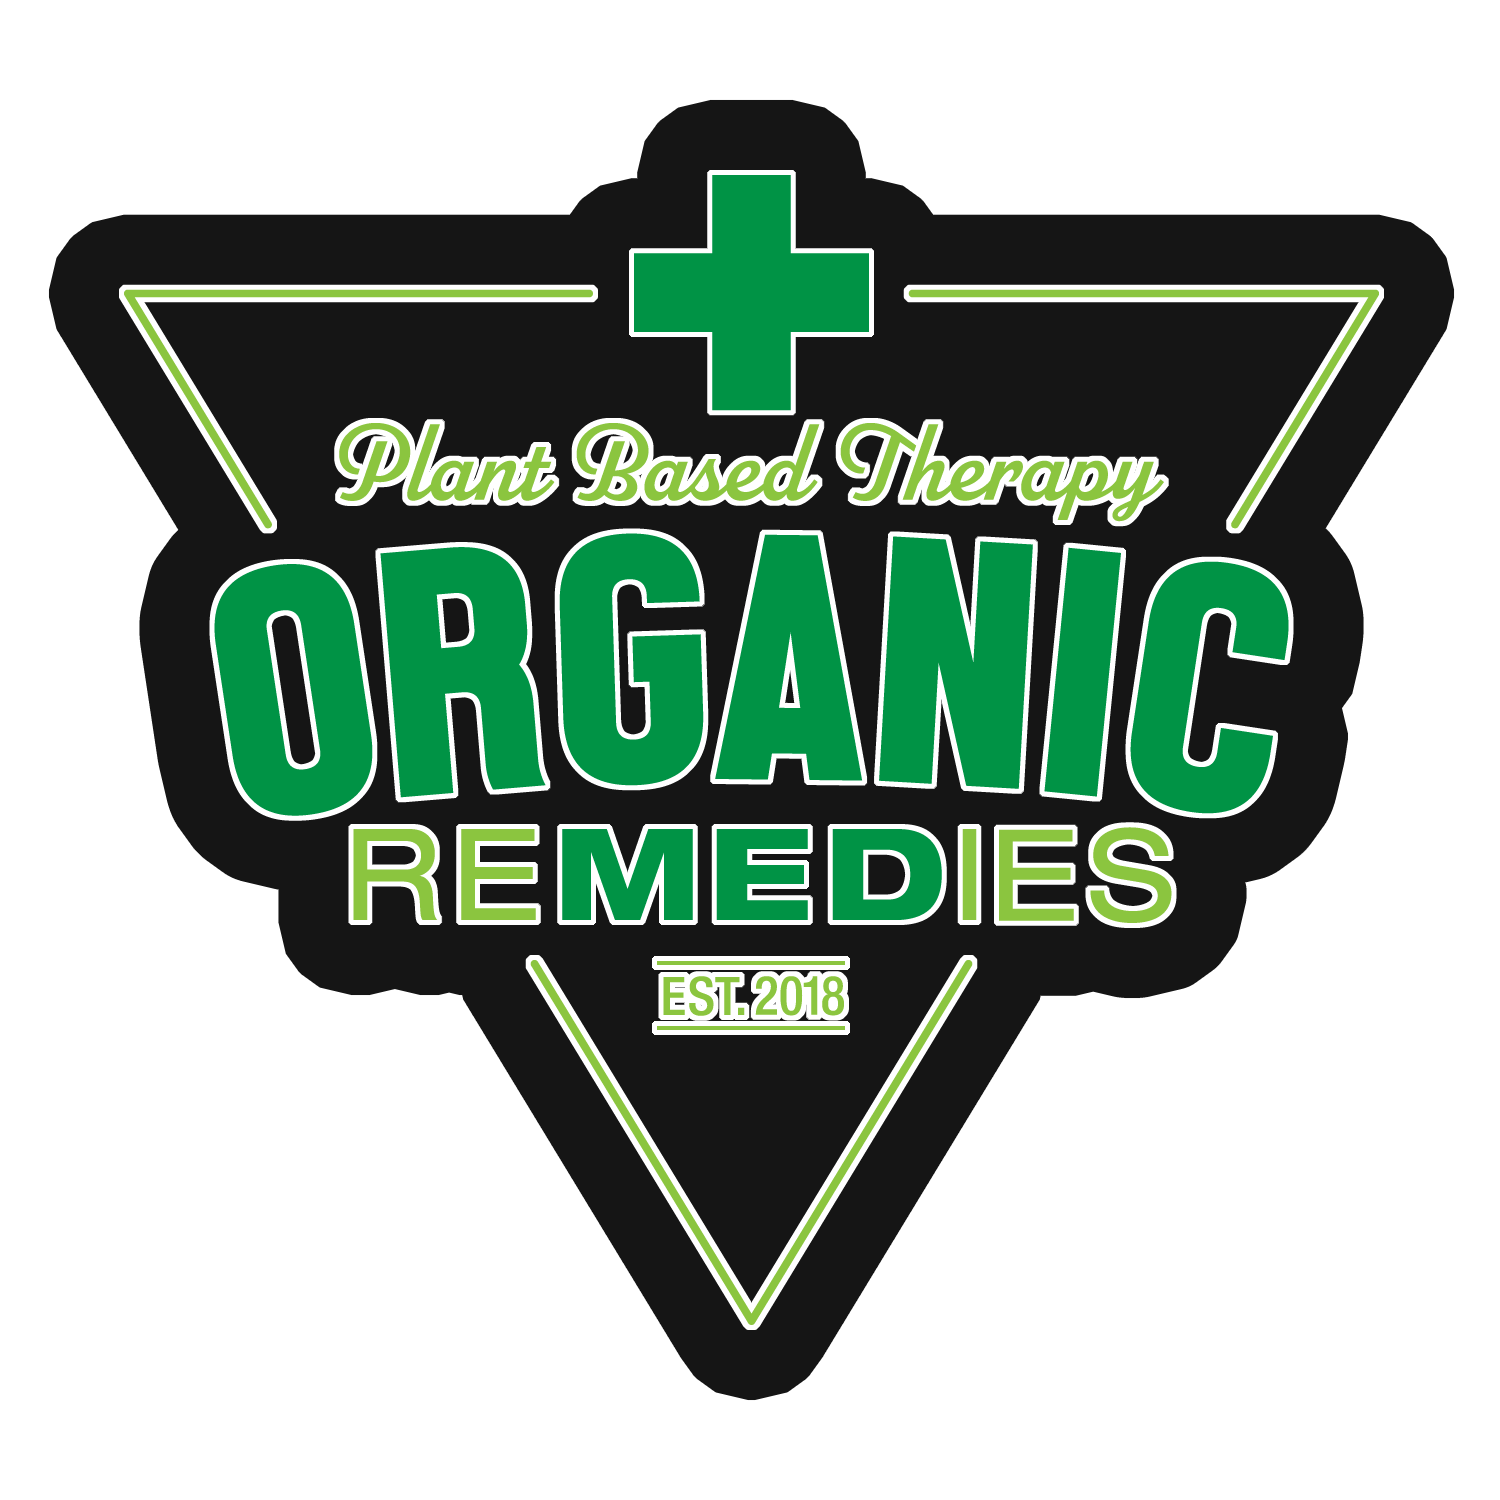 Organic Remedies Dispensary